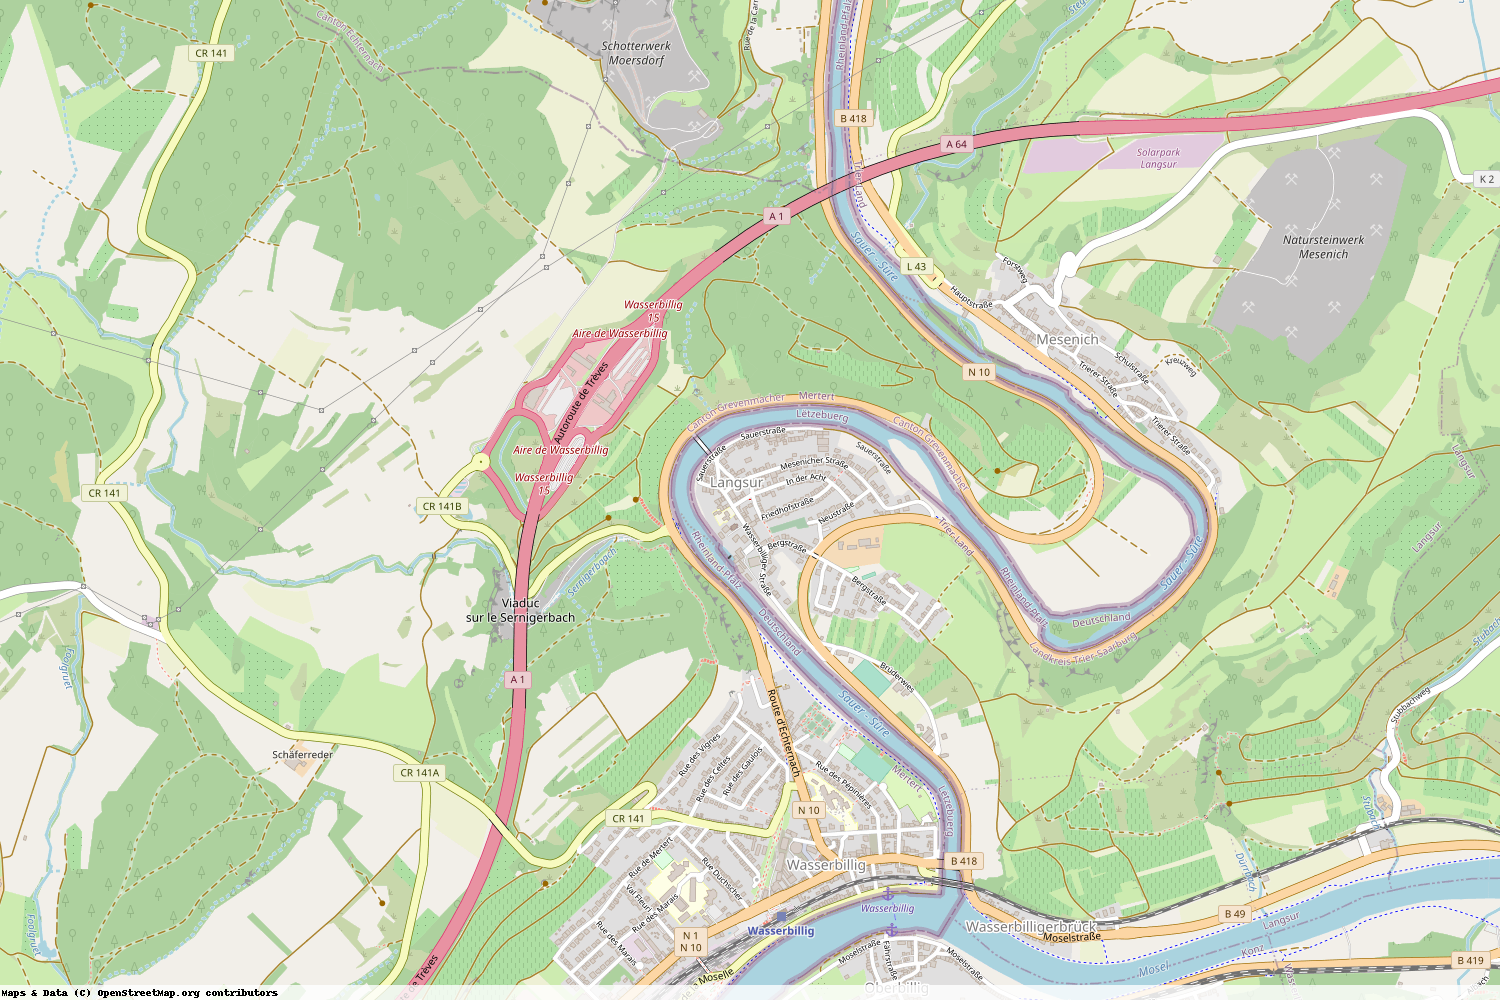 Ist gerade Stromausfall in Rheinland-Pfalz - Trier-Saarburg - Langsur?